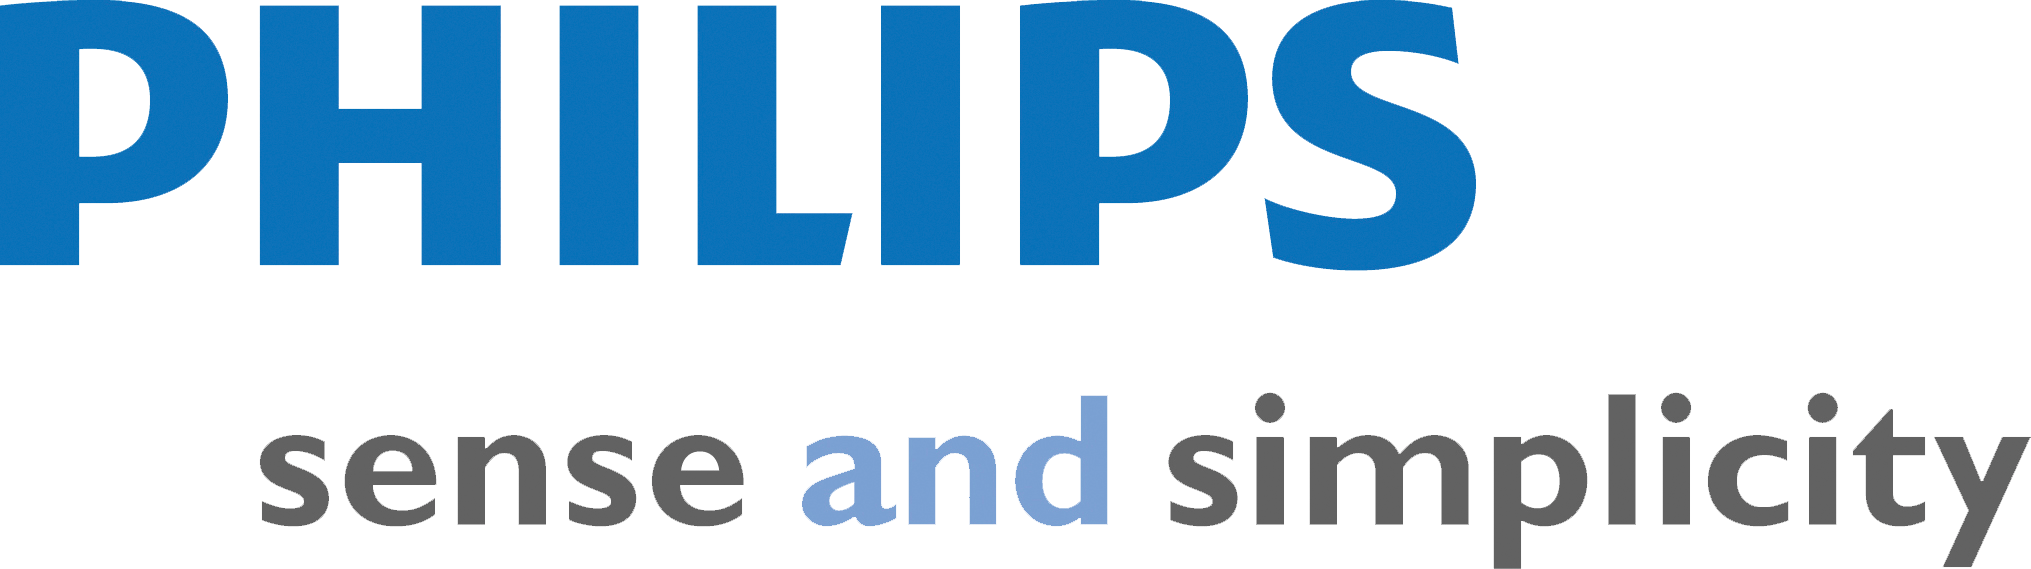 PHILIPS SENSE and SIMPLICITY Logo photo - 1